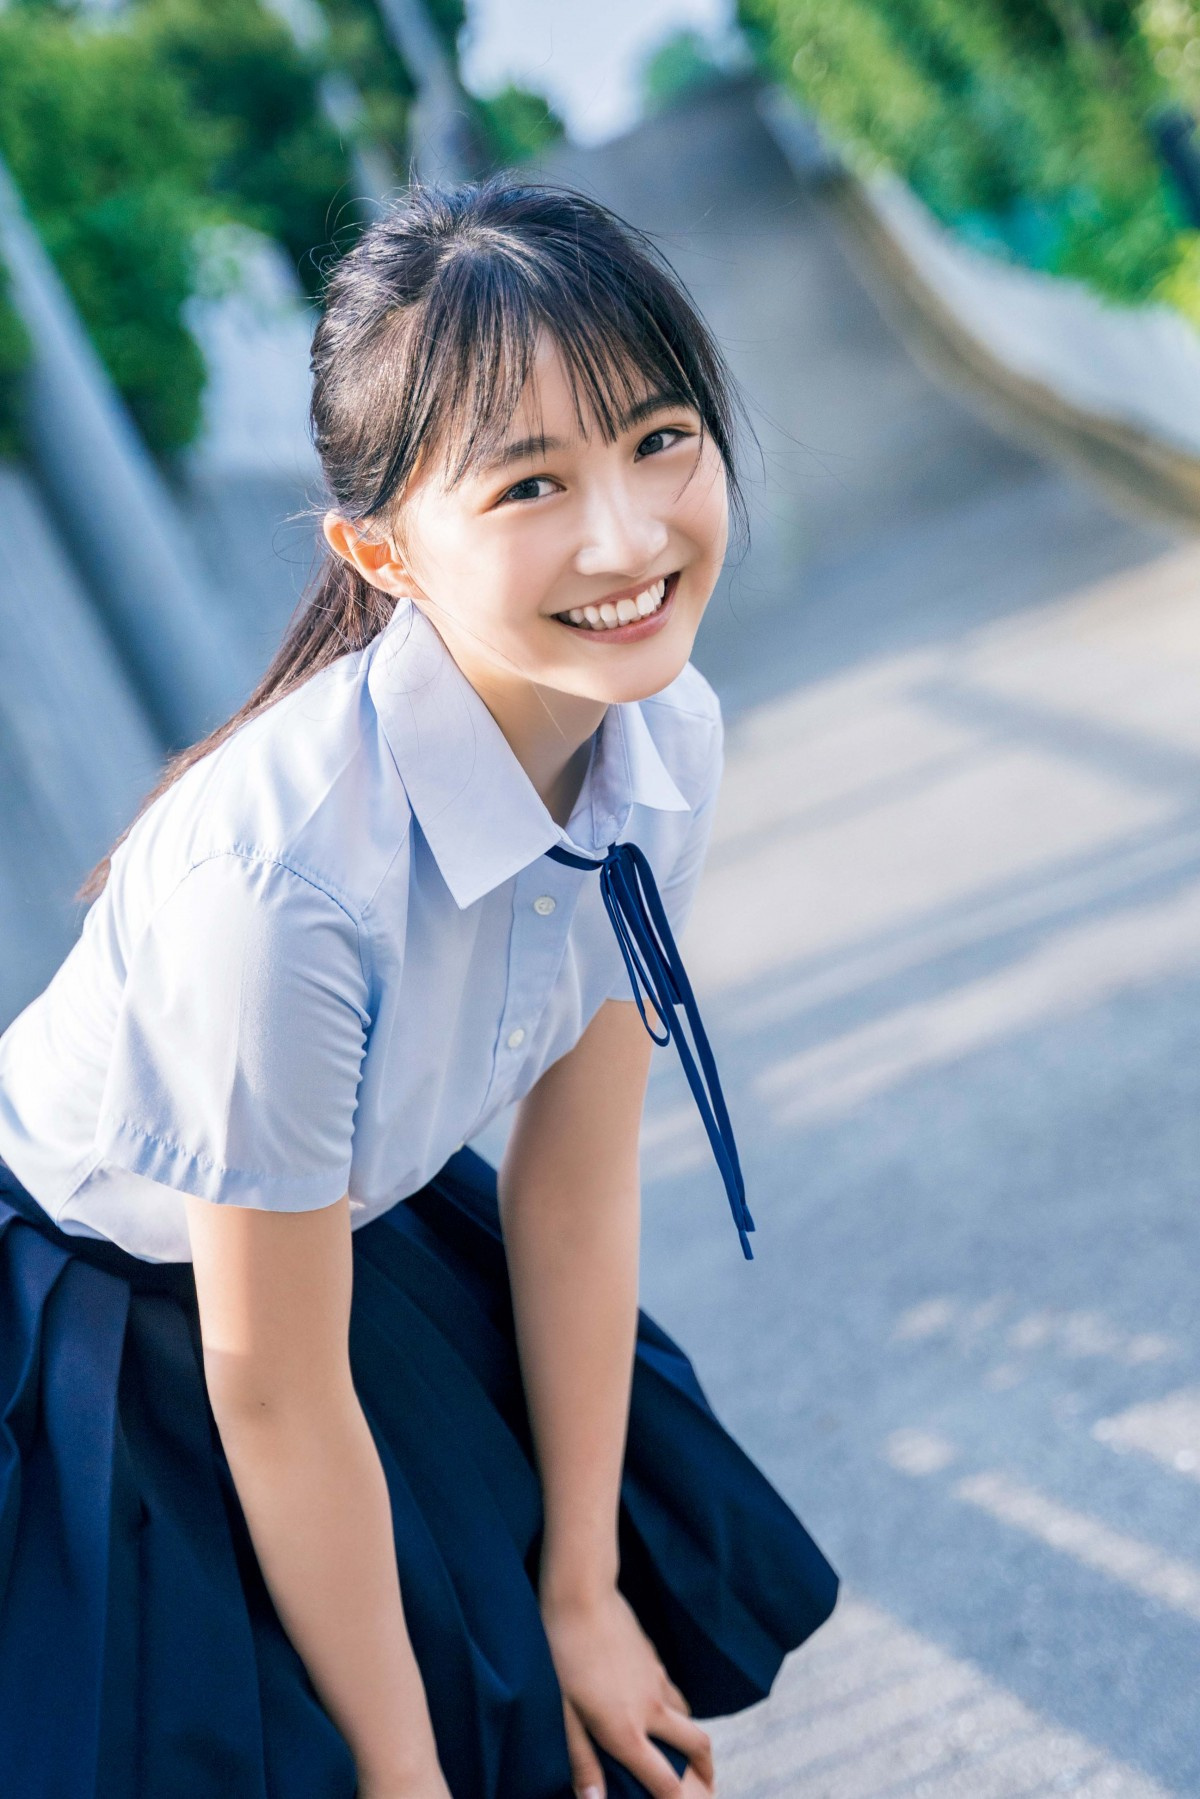 Nmb48の正統派美少女 山本彩加 制服姿で駆け出す 白ワンピ姿で美肌も披露 Oricon News